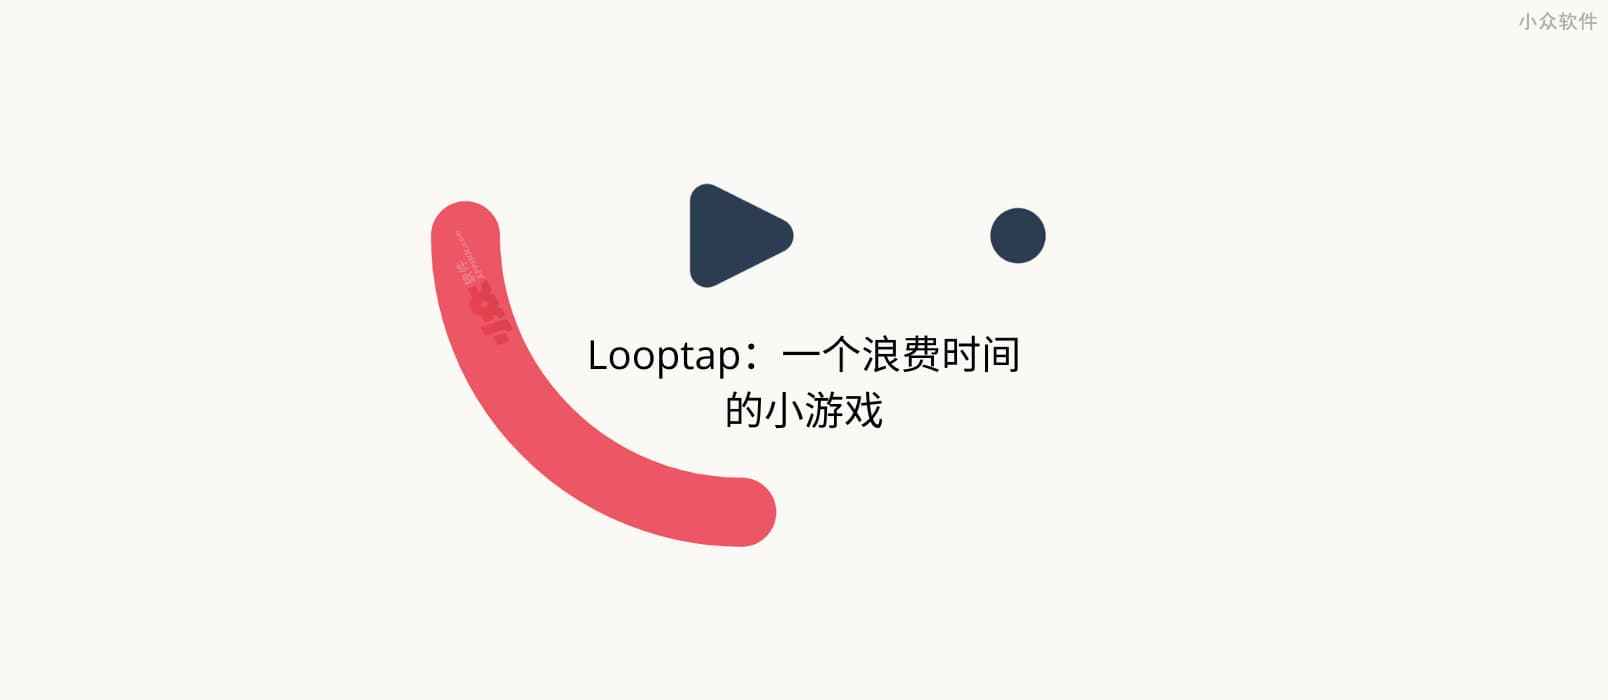 Looptap - 一个浪费你时间的最小游戏，是男人就点 1000 下